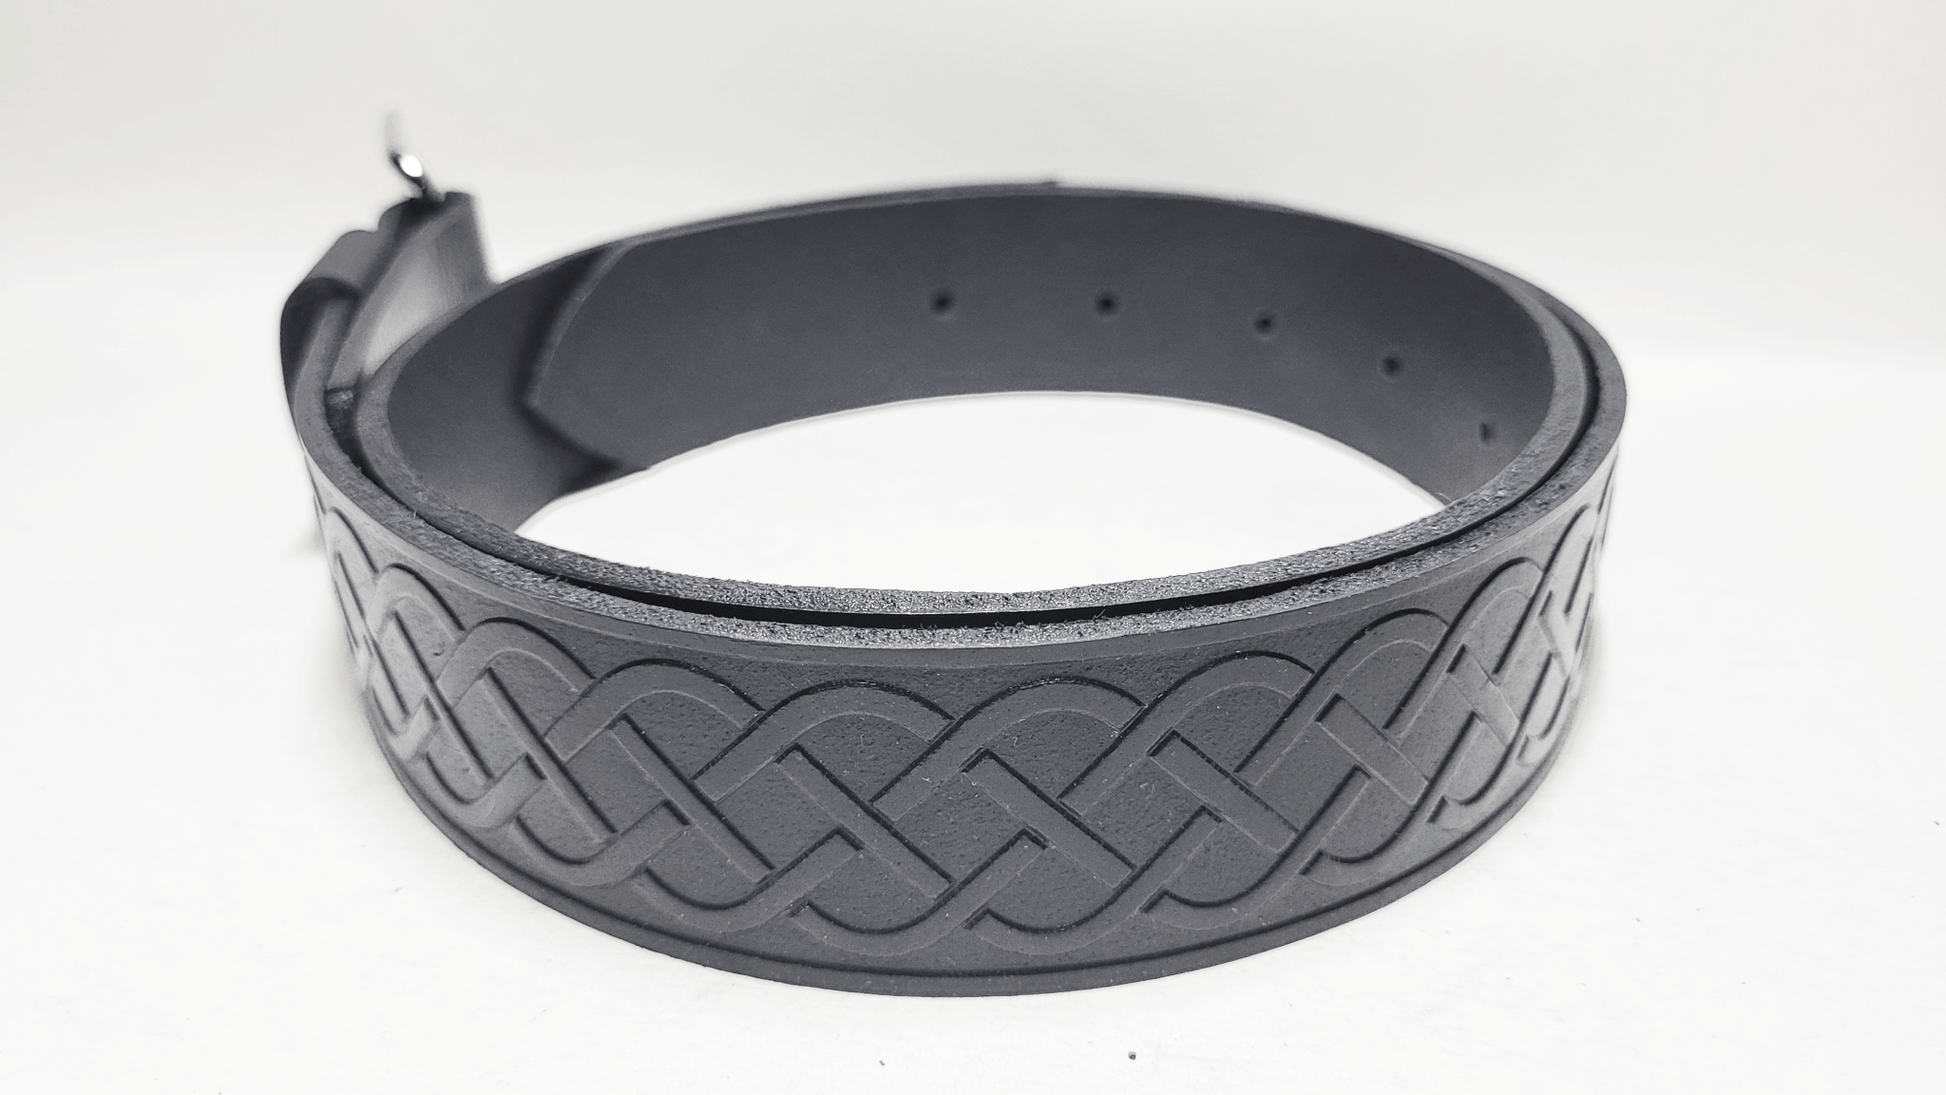 Handmade Embossed Buffalo Leather Belt – Buffalo Artisanal